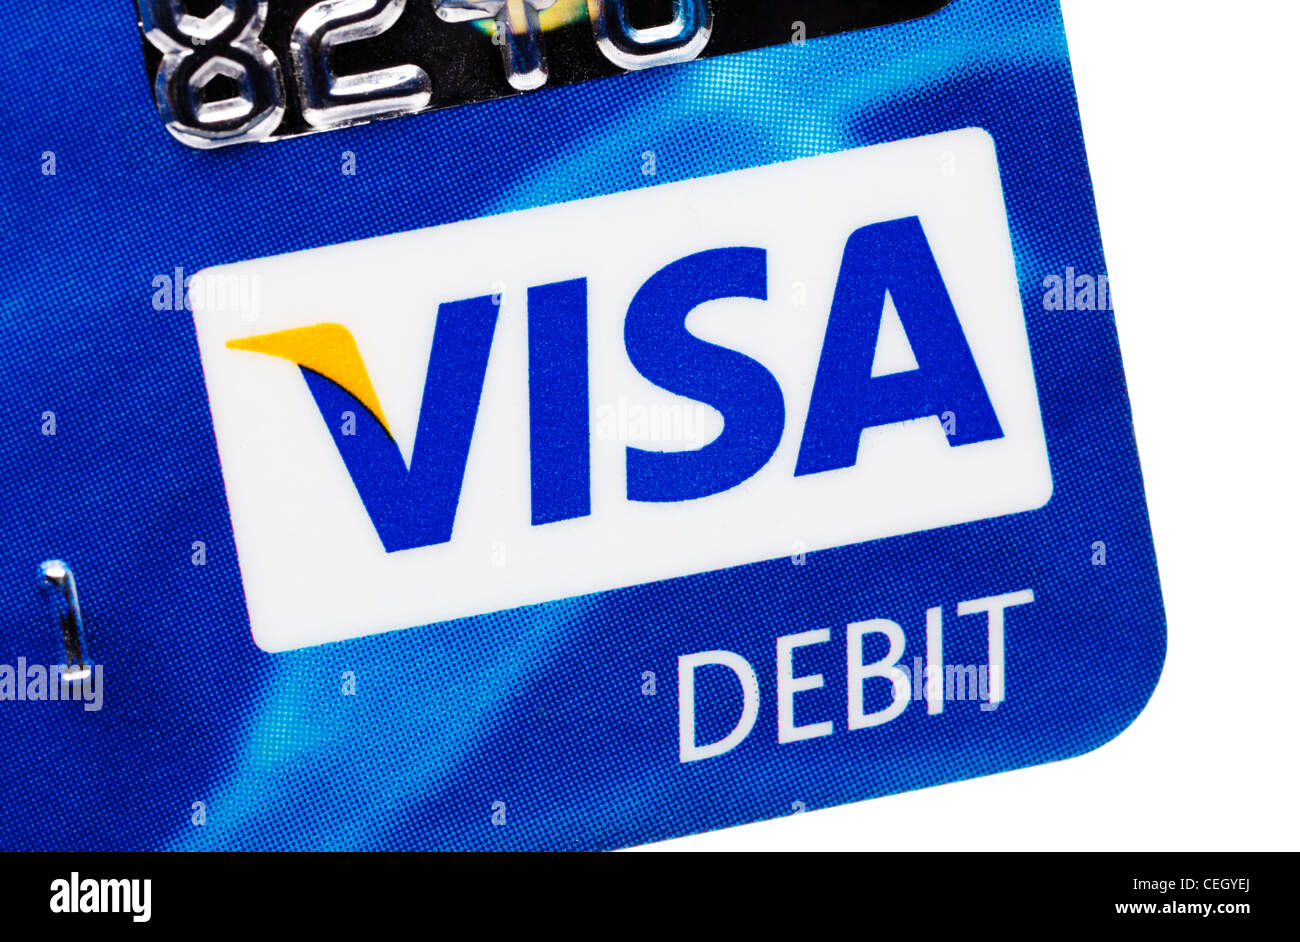 Visa debit card logo close up Stock Photo